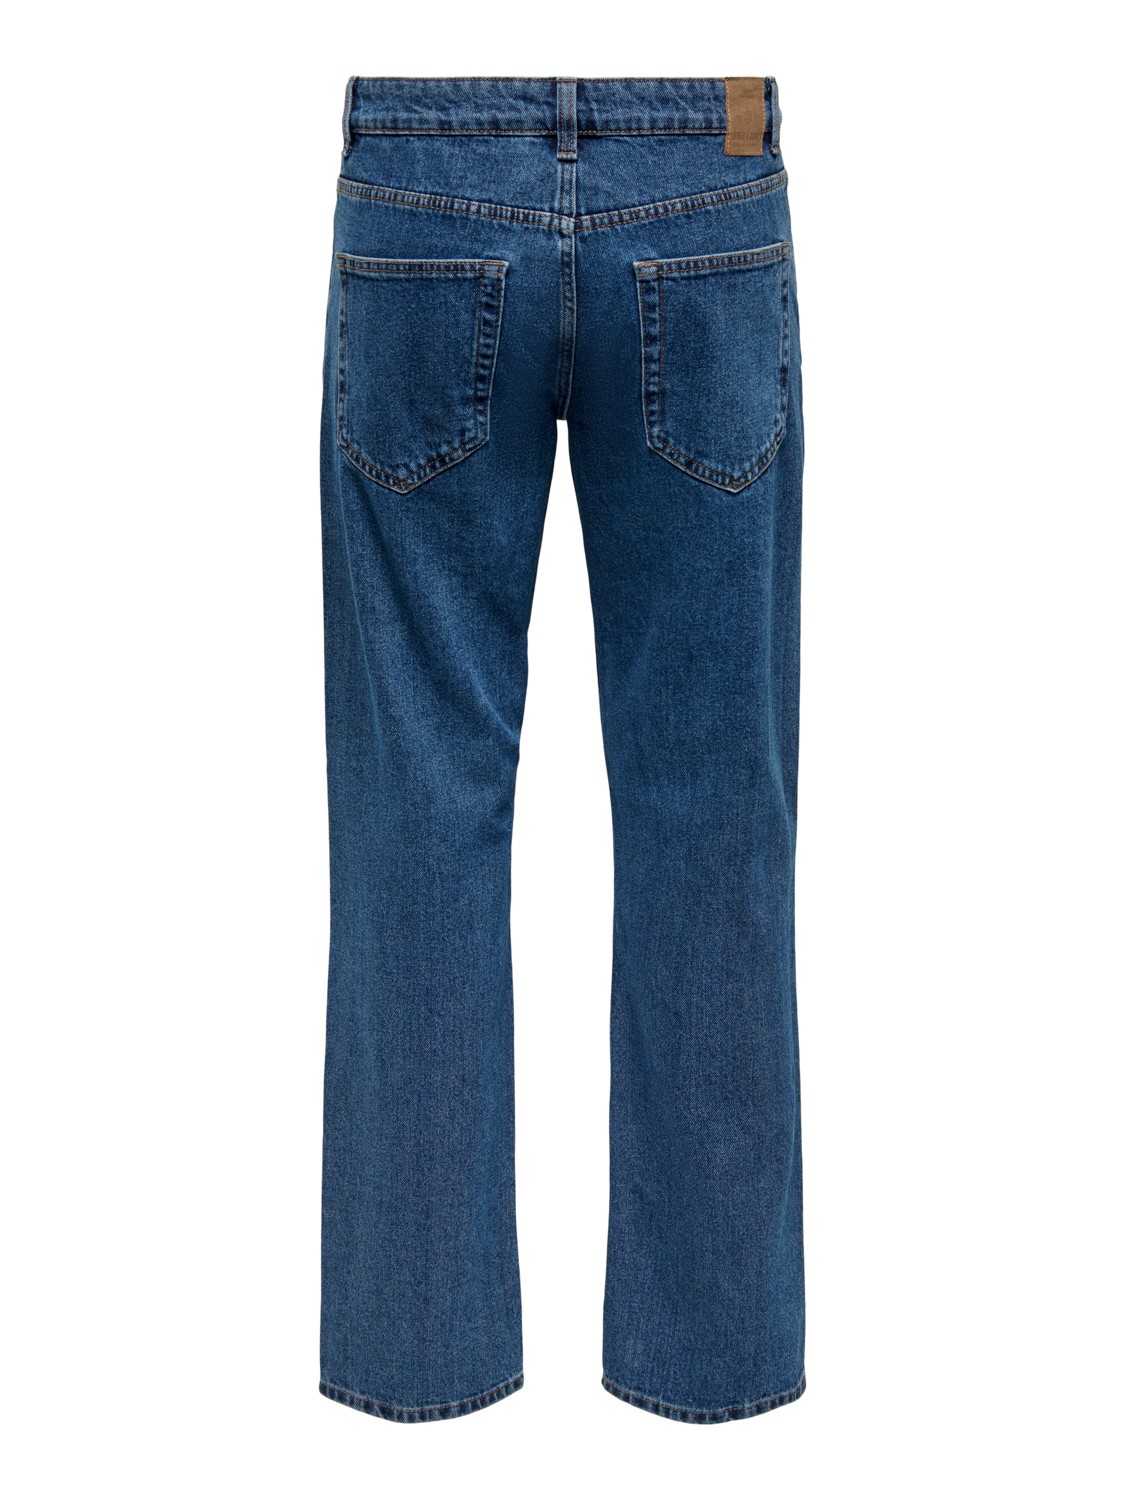 Only & Sons Herren Jeans ONSEDGE D. BLUE 3813 - Relaxed Fit - Blau - Blue D günstig online kaufen